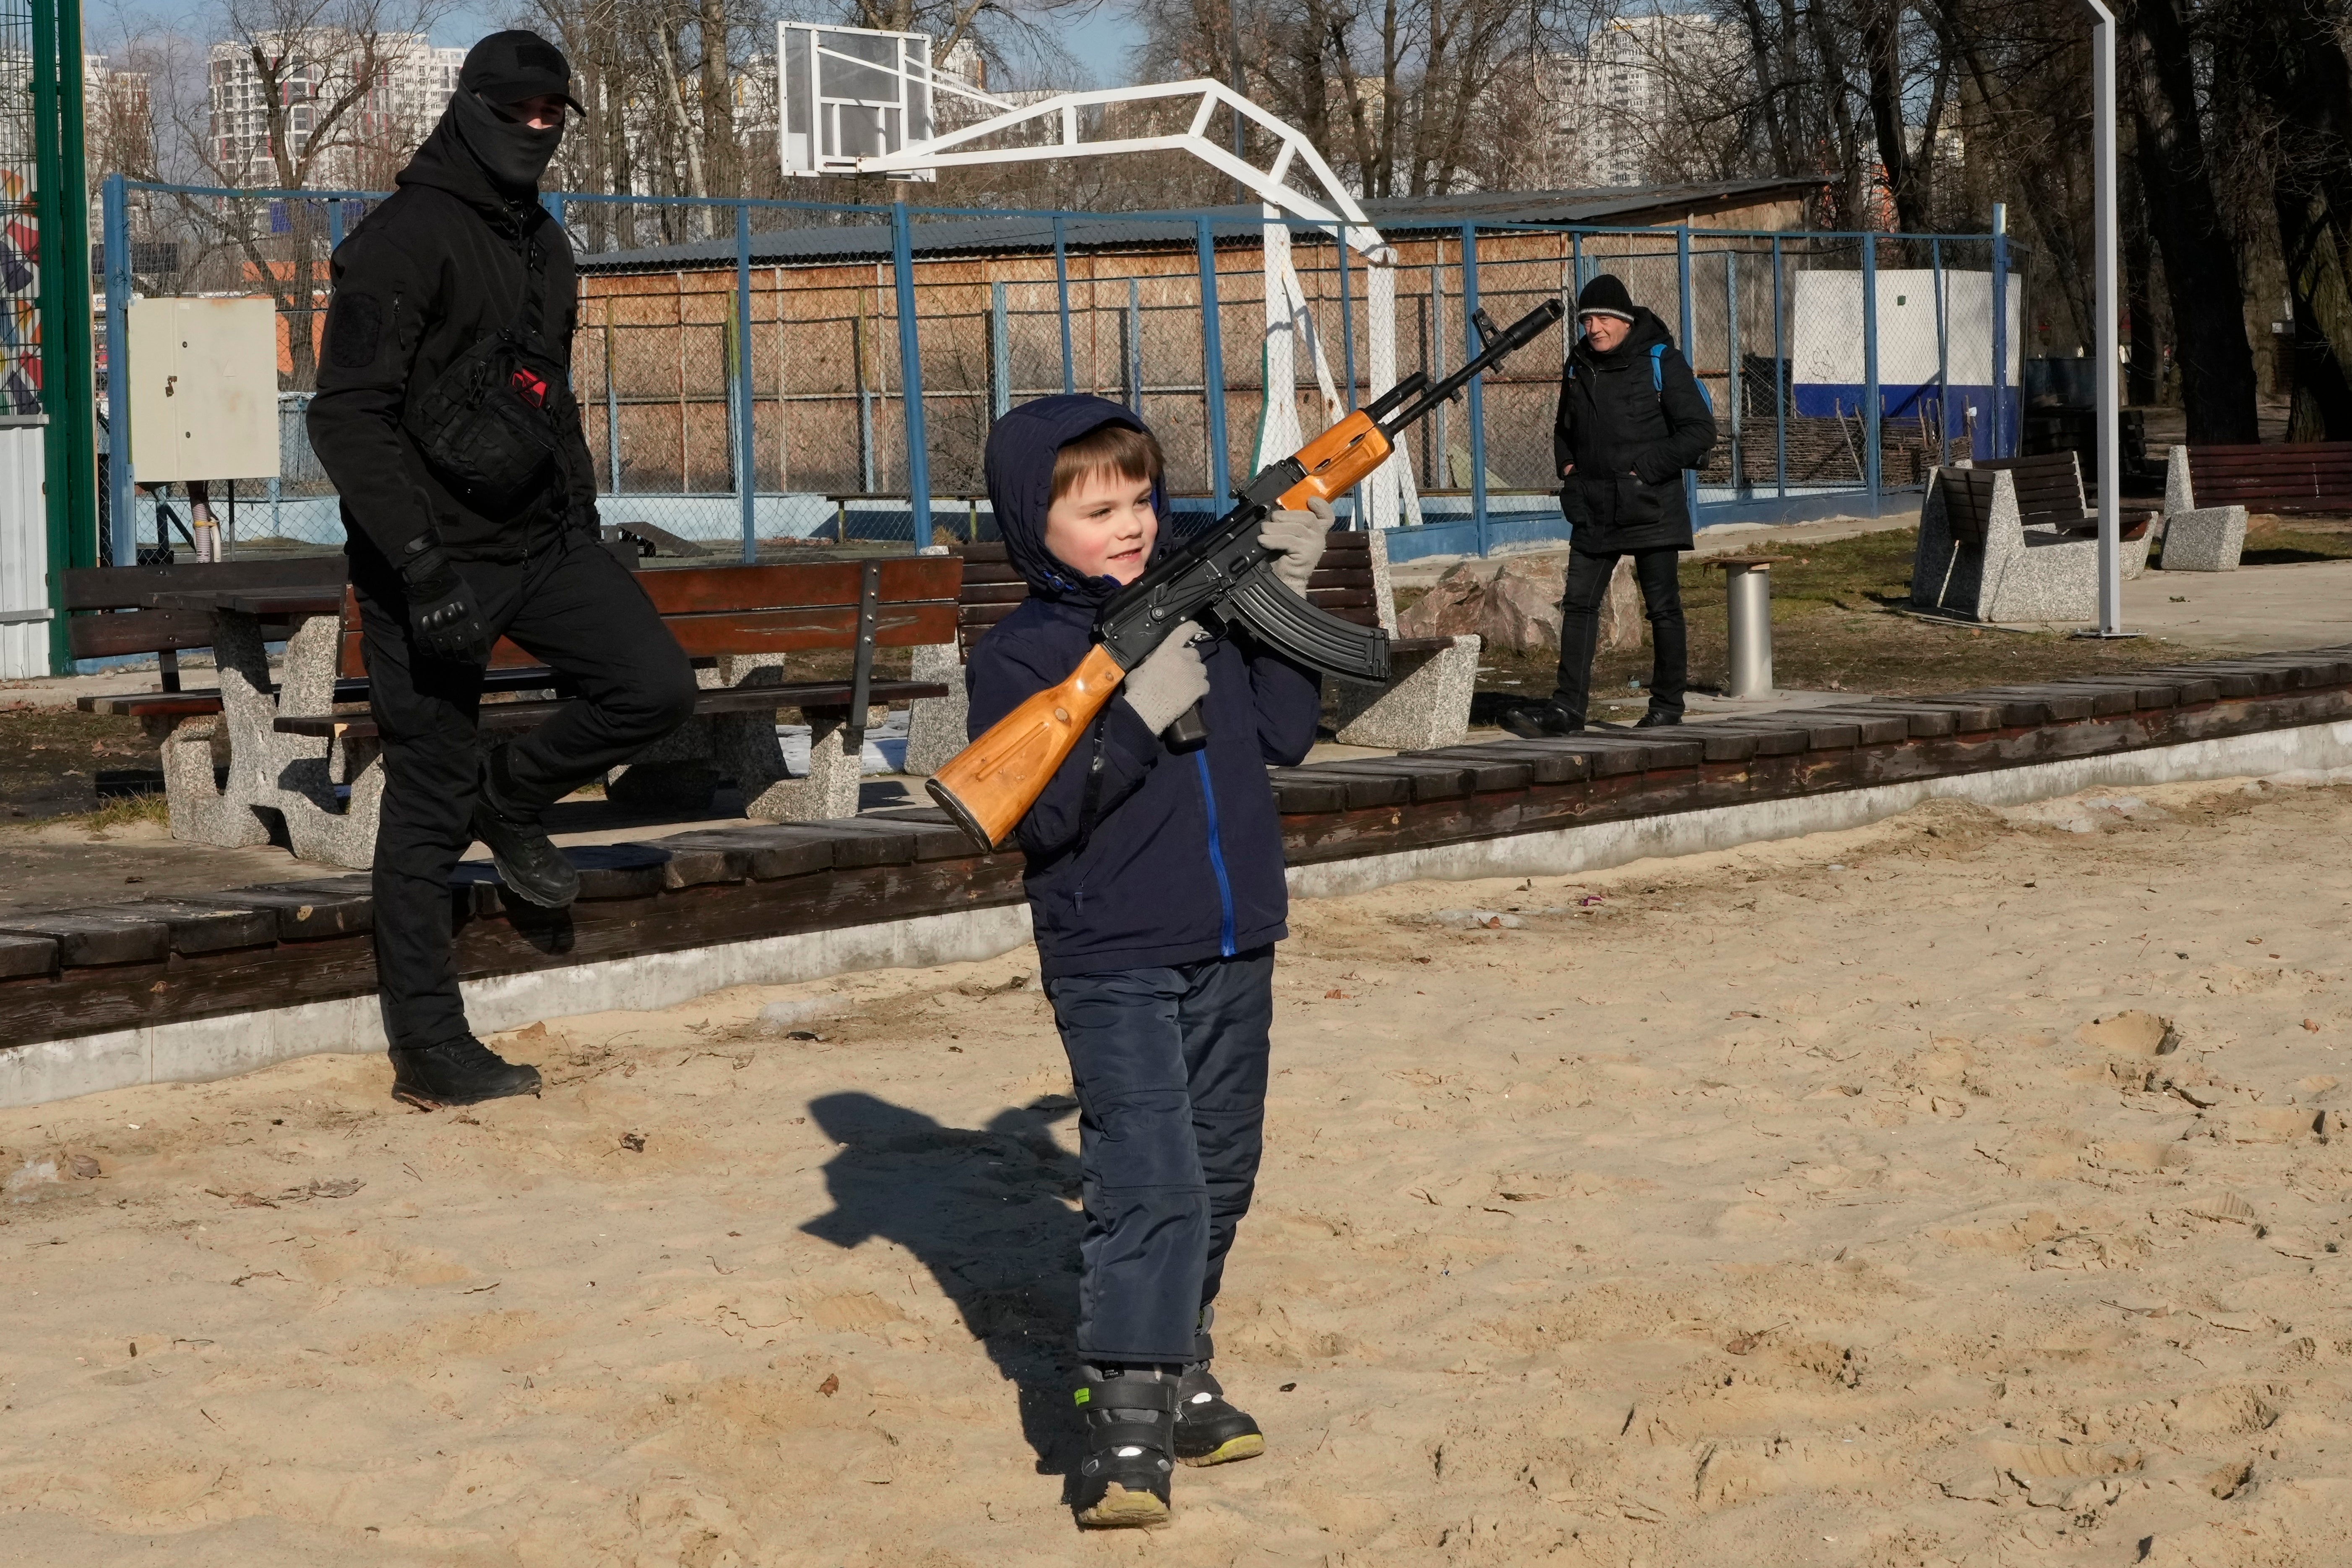 This little boy was seen holding a Kalashnikov